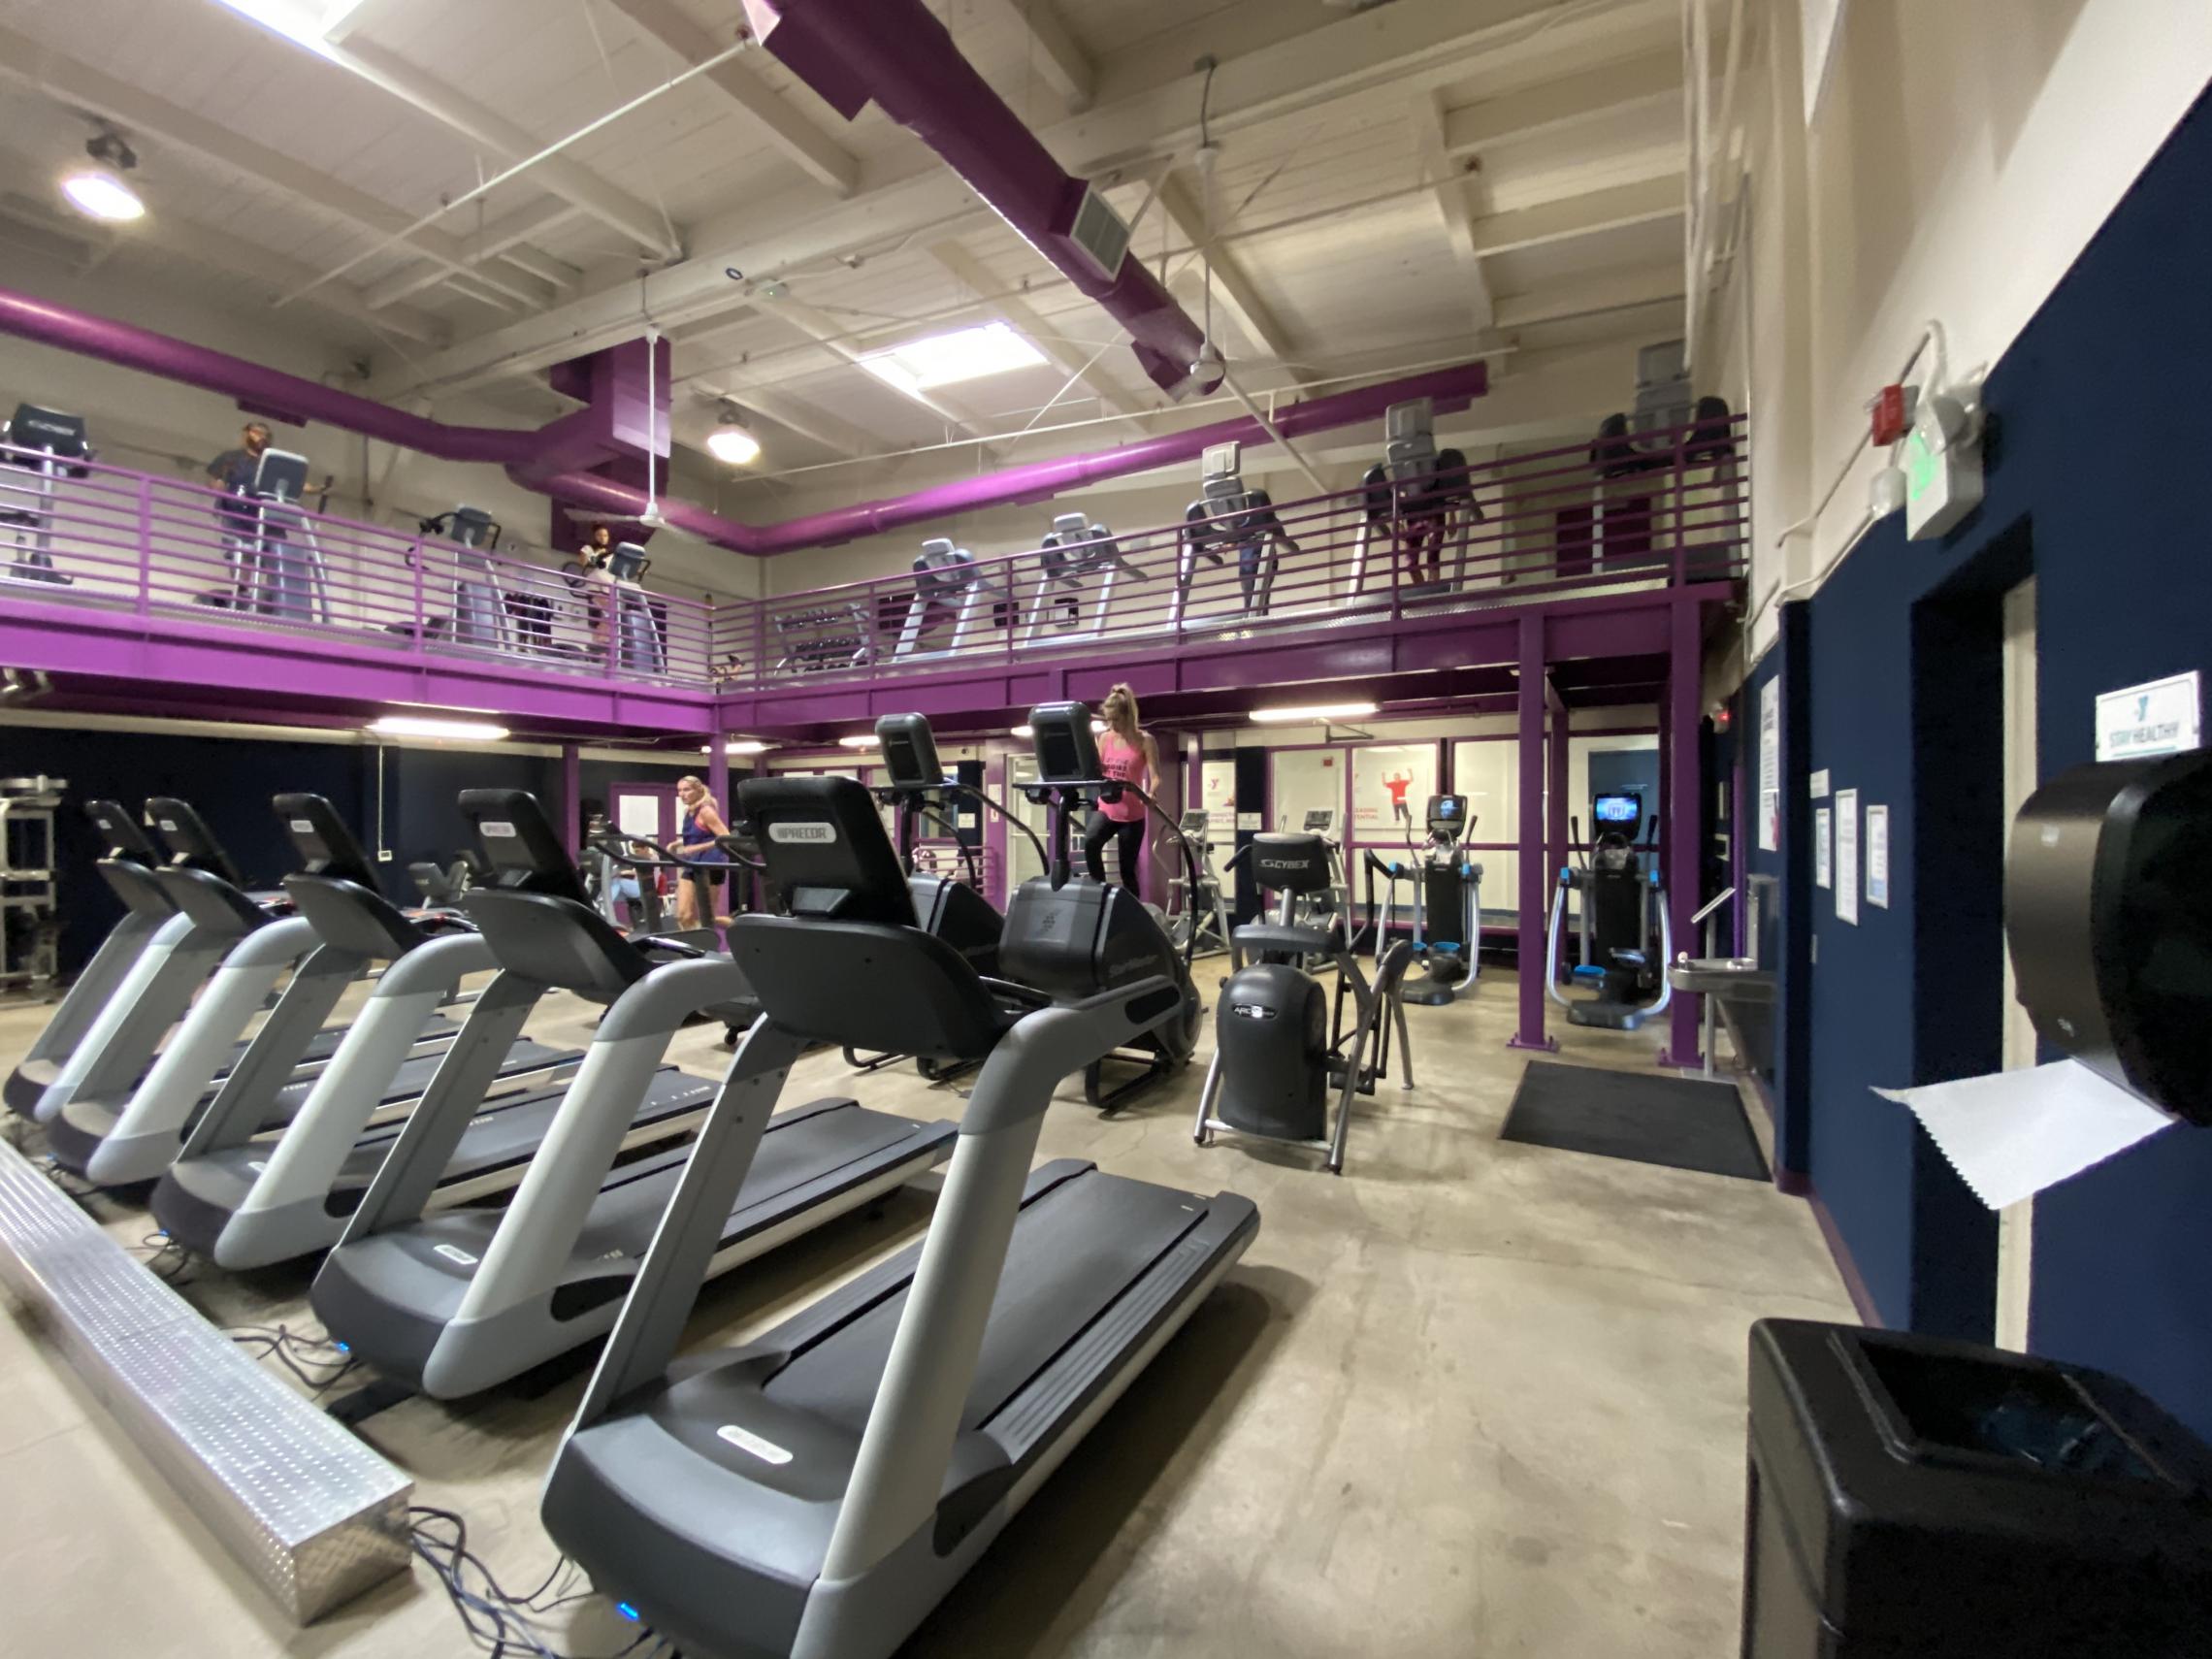 Fitness room with treadmills